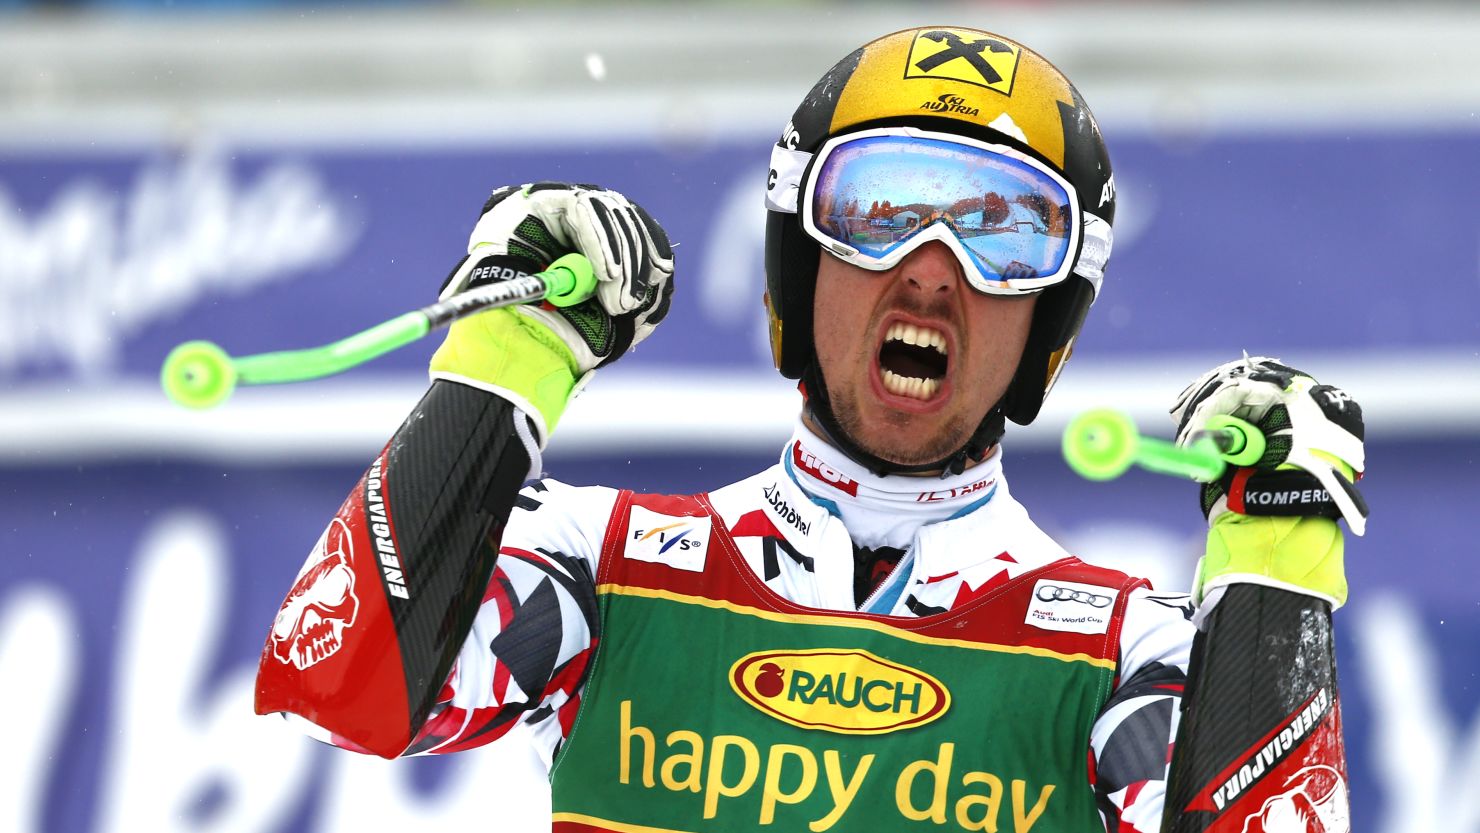 Marcel Hirscher takes first place in the FIS Alpine Ski World Cup men's Giant Slalom in Kranjska Gora, Slovenia. 